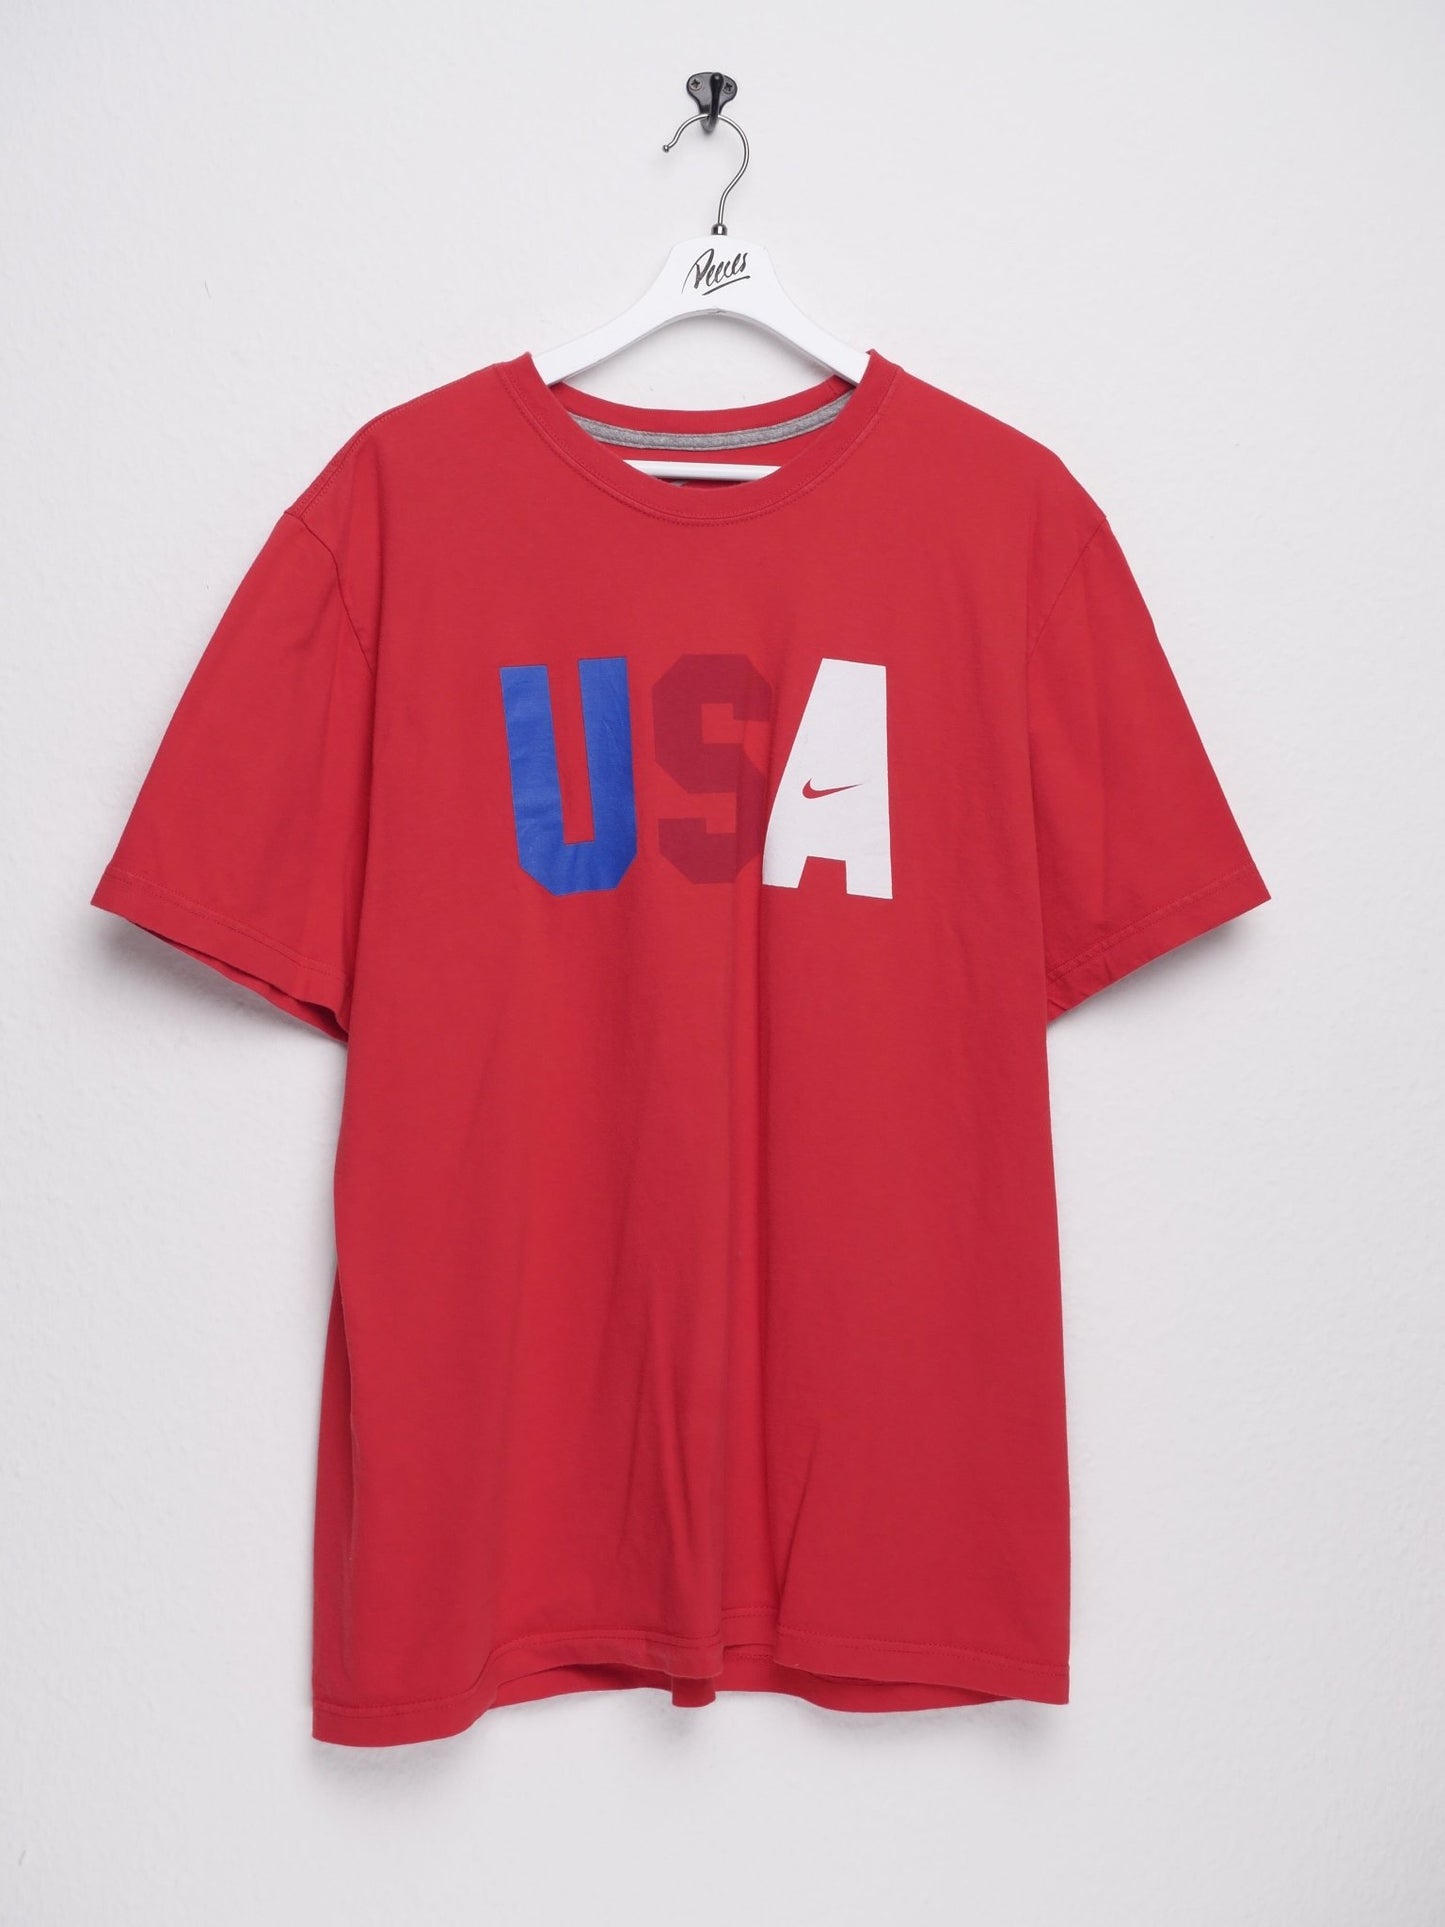 nike printed Swoosh 'USA' red Shirt - Peeces